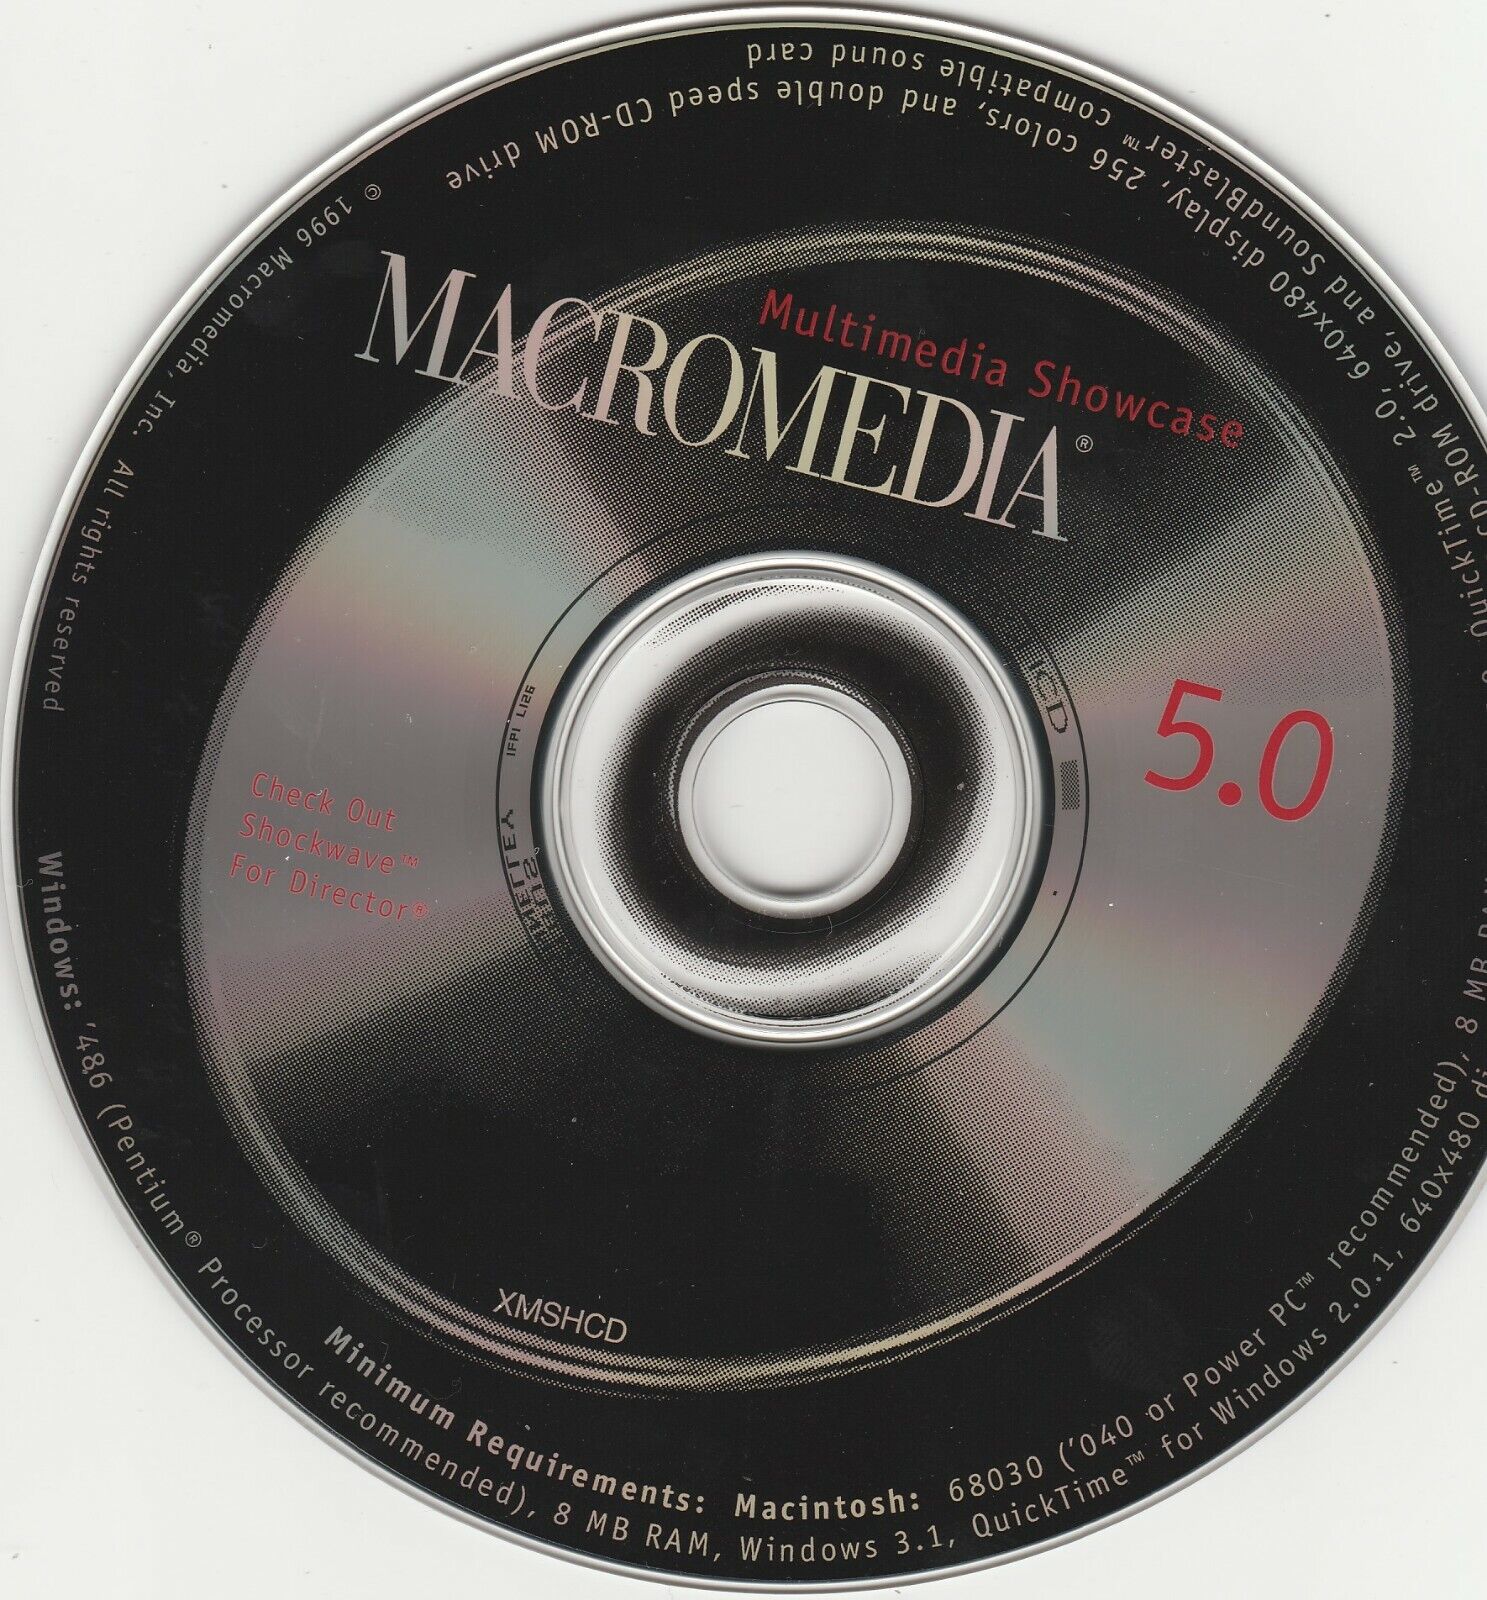 Multimedia Showcase Macromedia 5.0 Software 1996 ~ CD-ROM